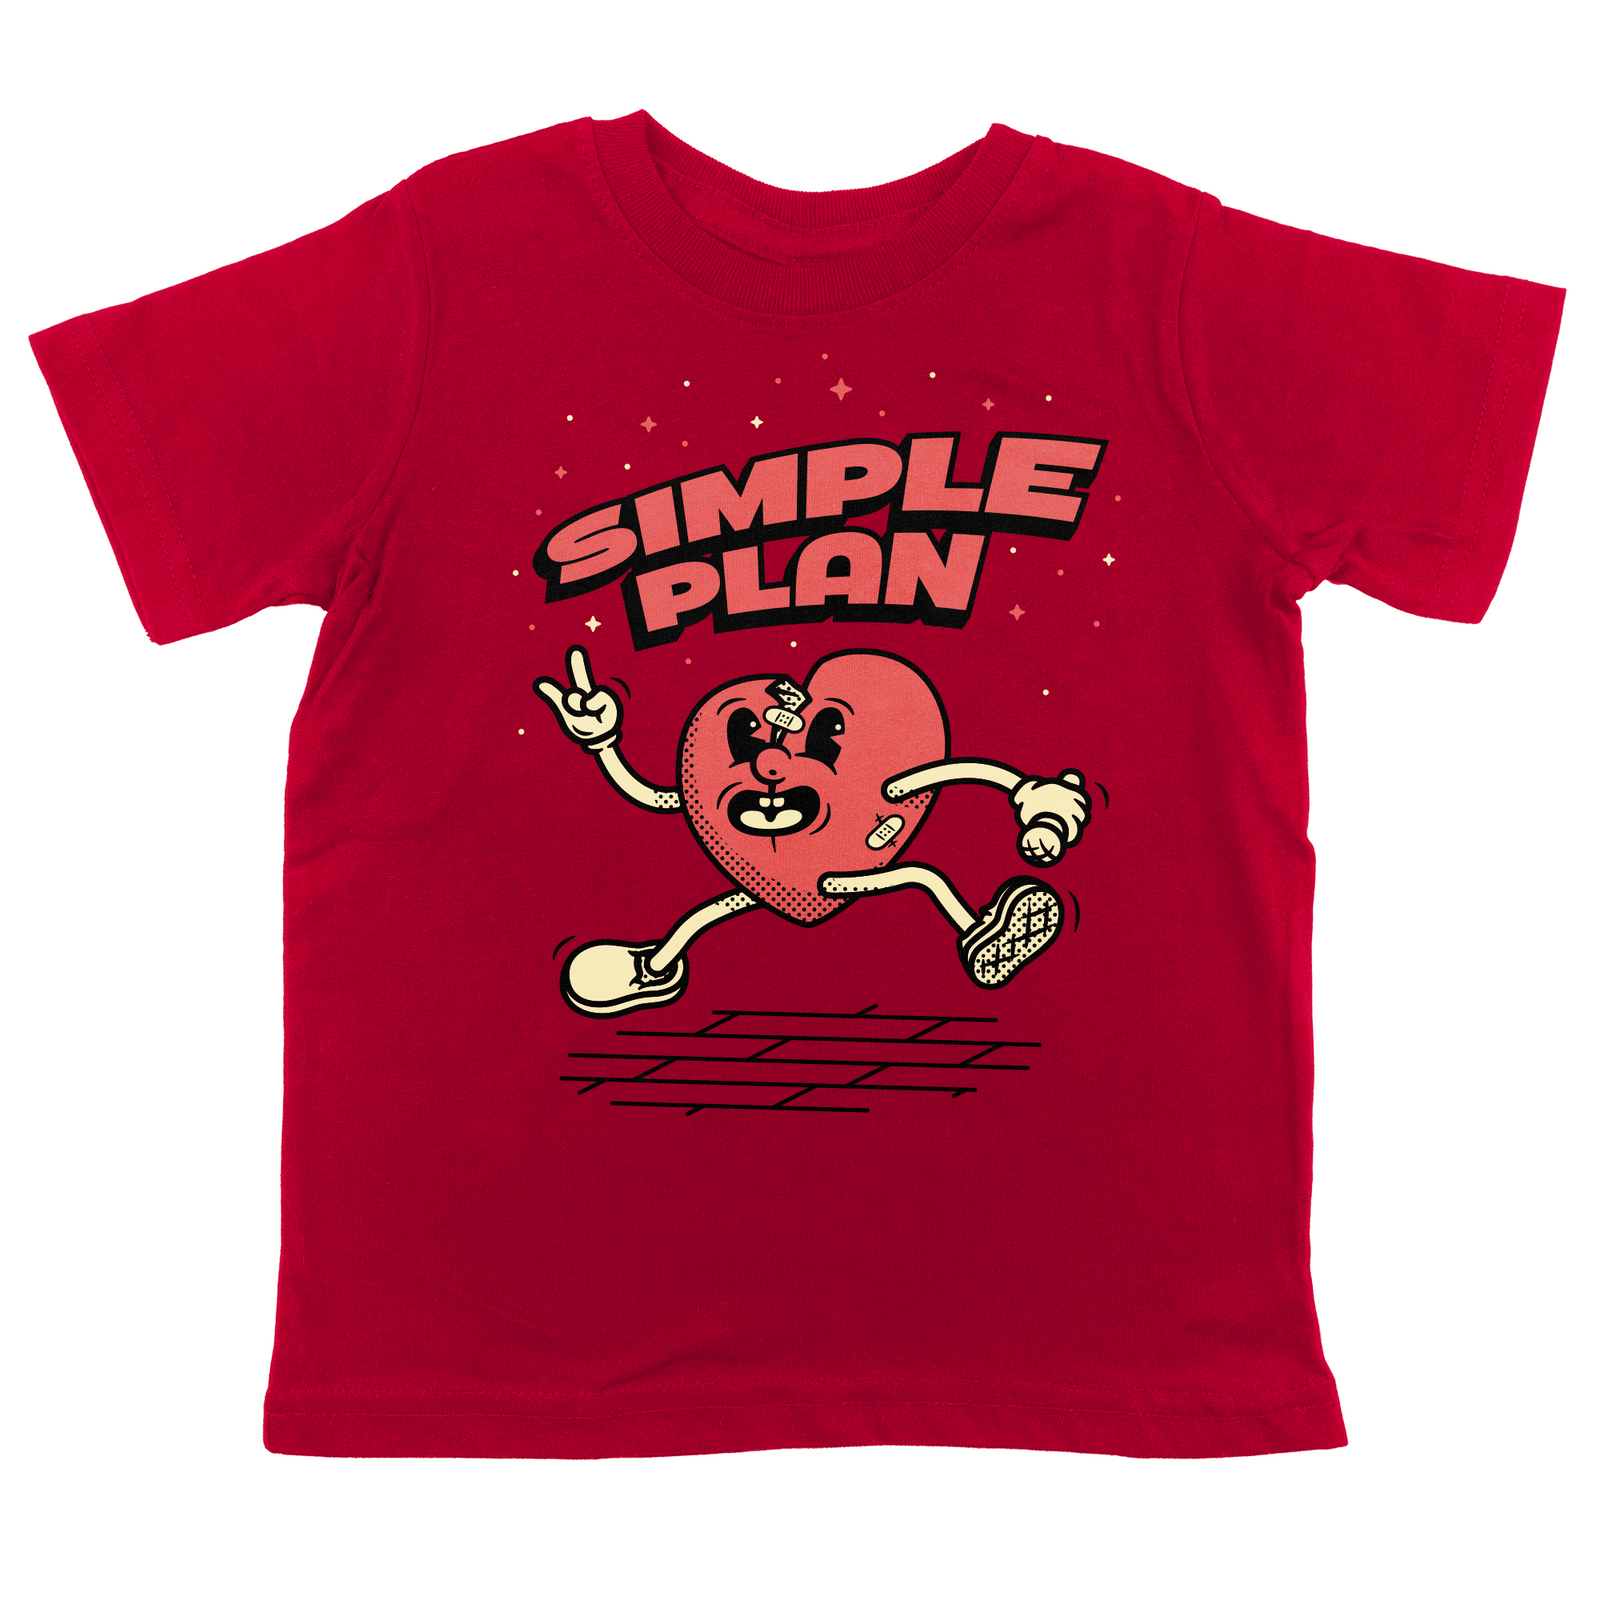 Simple Plan "Jump" Toddler T-Shirt (Red)